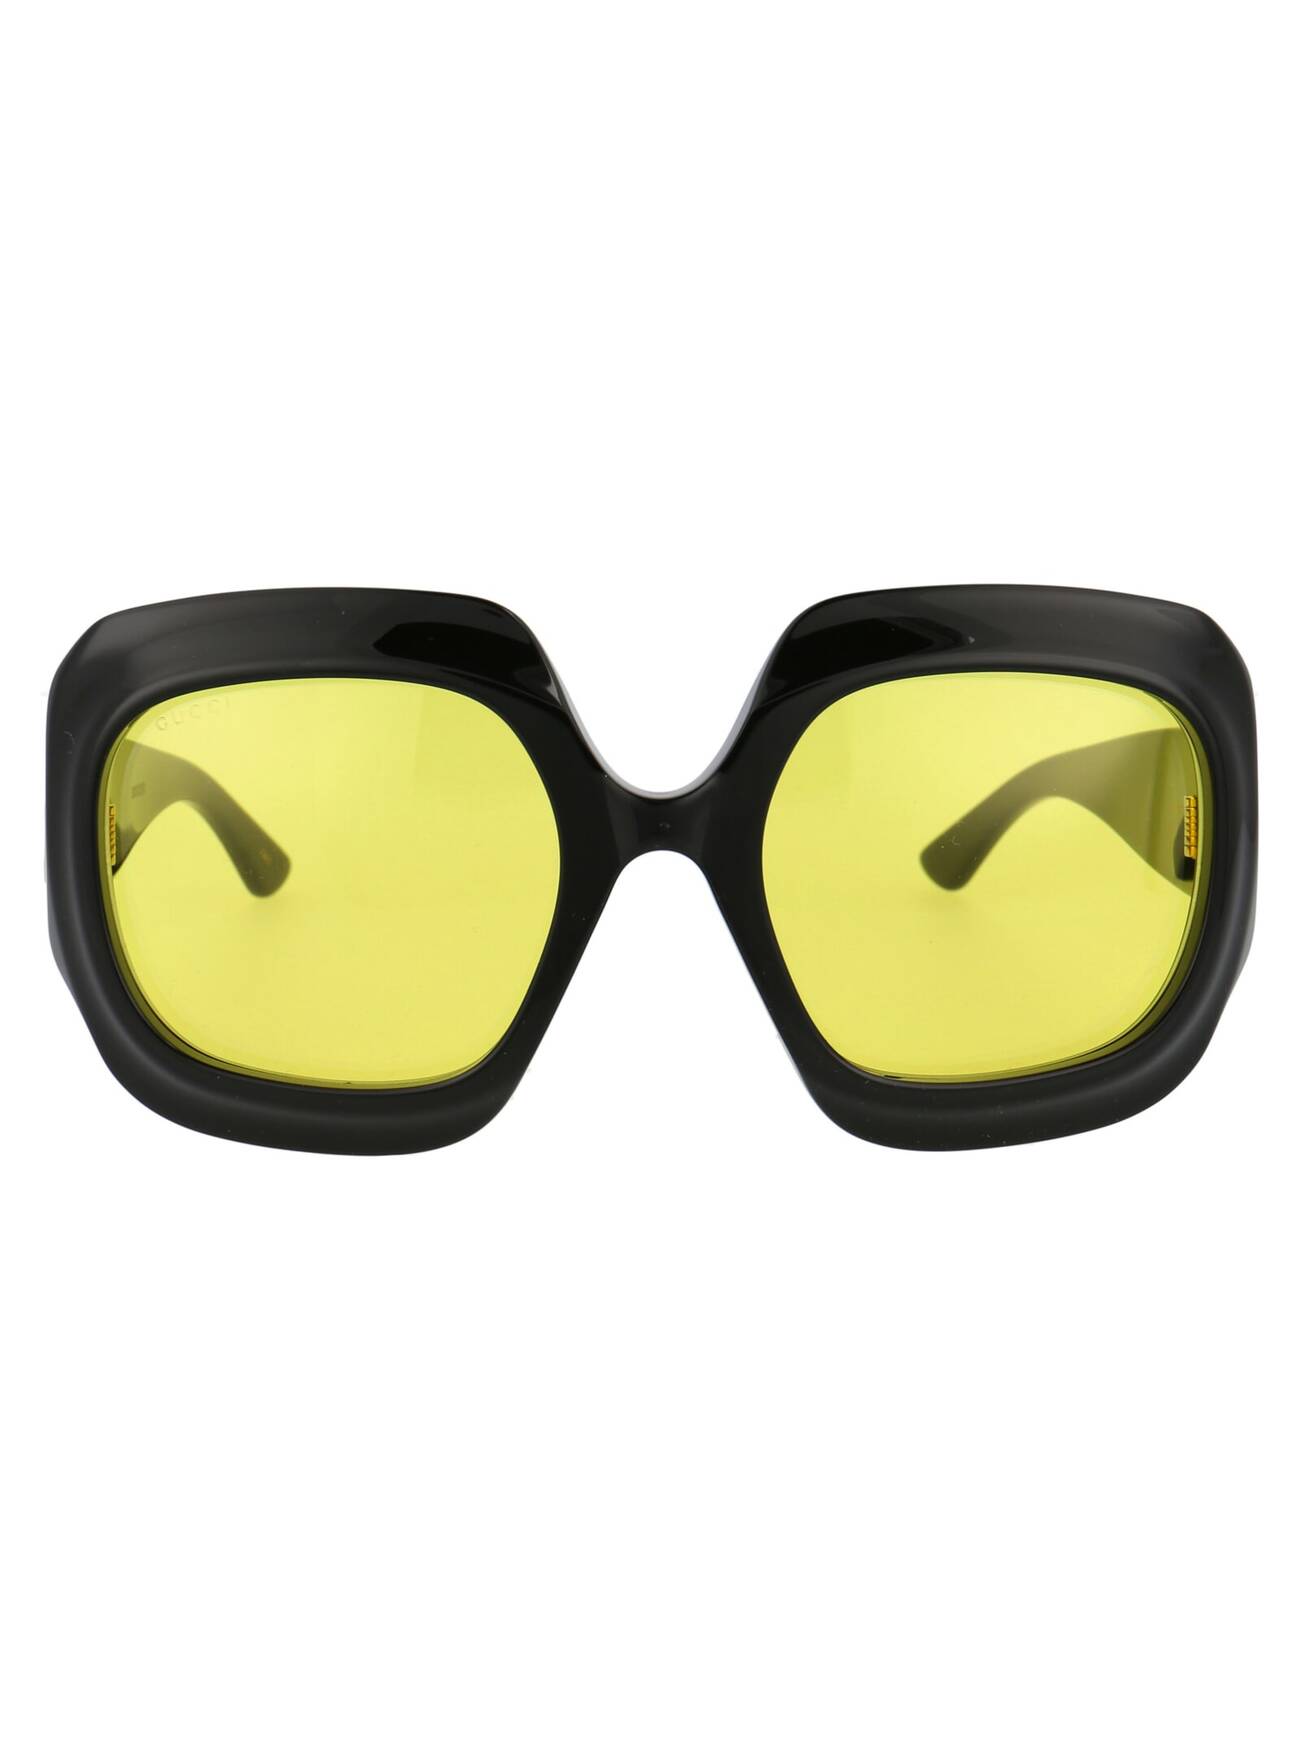 Gucci Eyewear Gg0988s Sunglasses in black / yellow